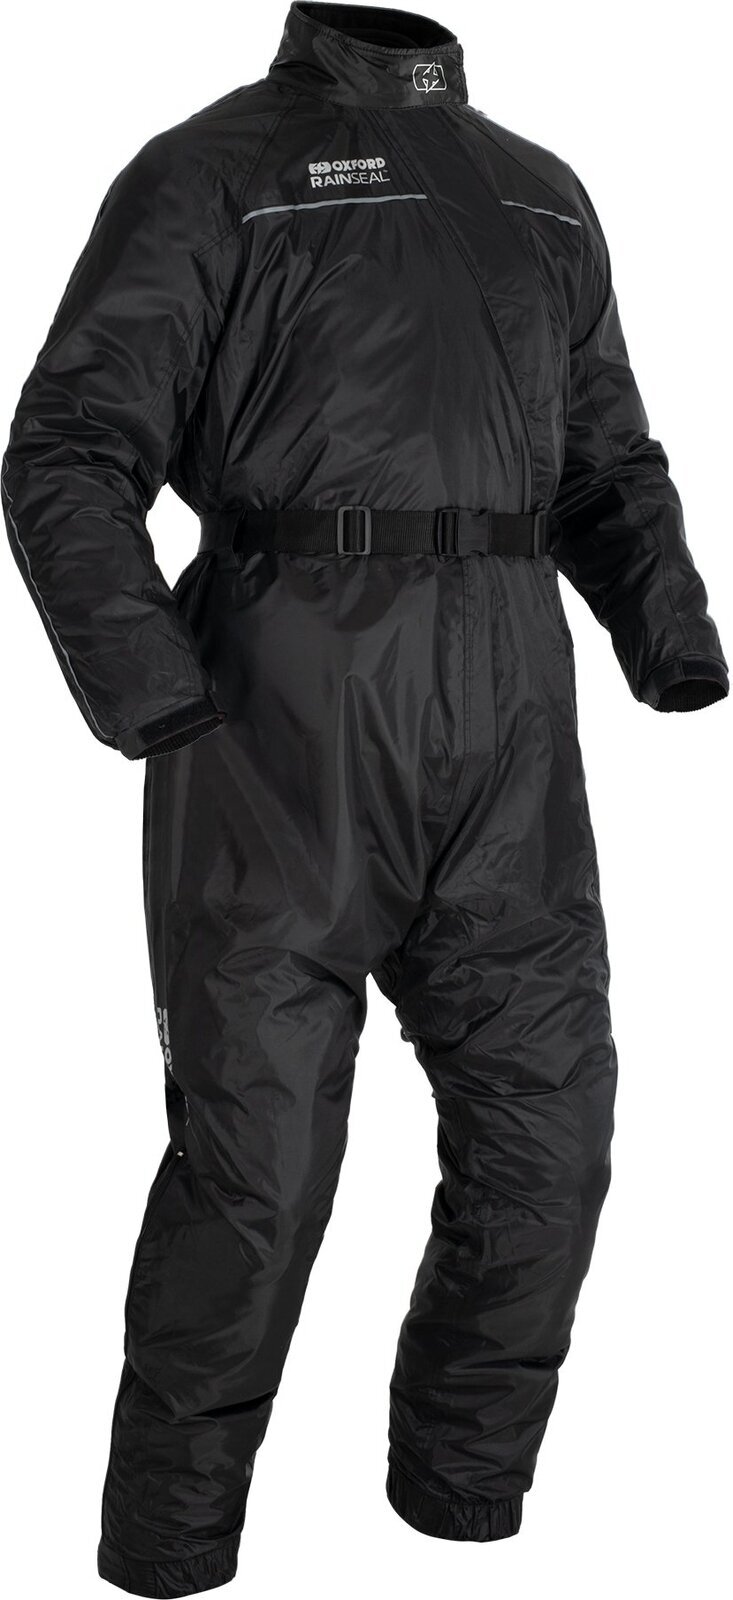 Motorcycle Rain Suit Oxford Rainseal Oversuit Black XL